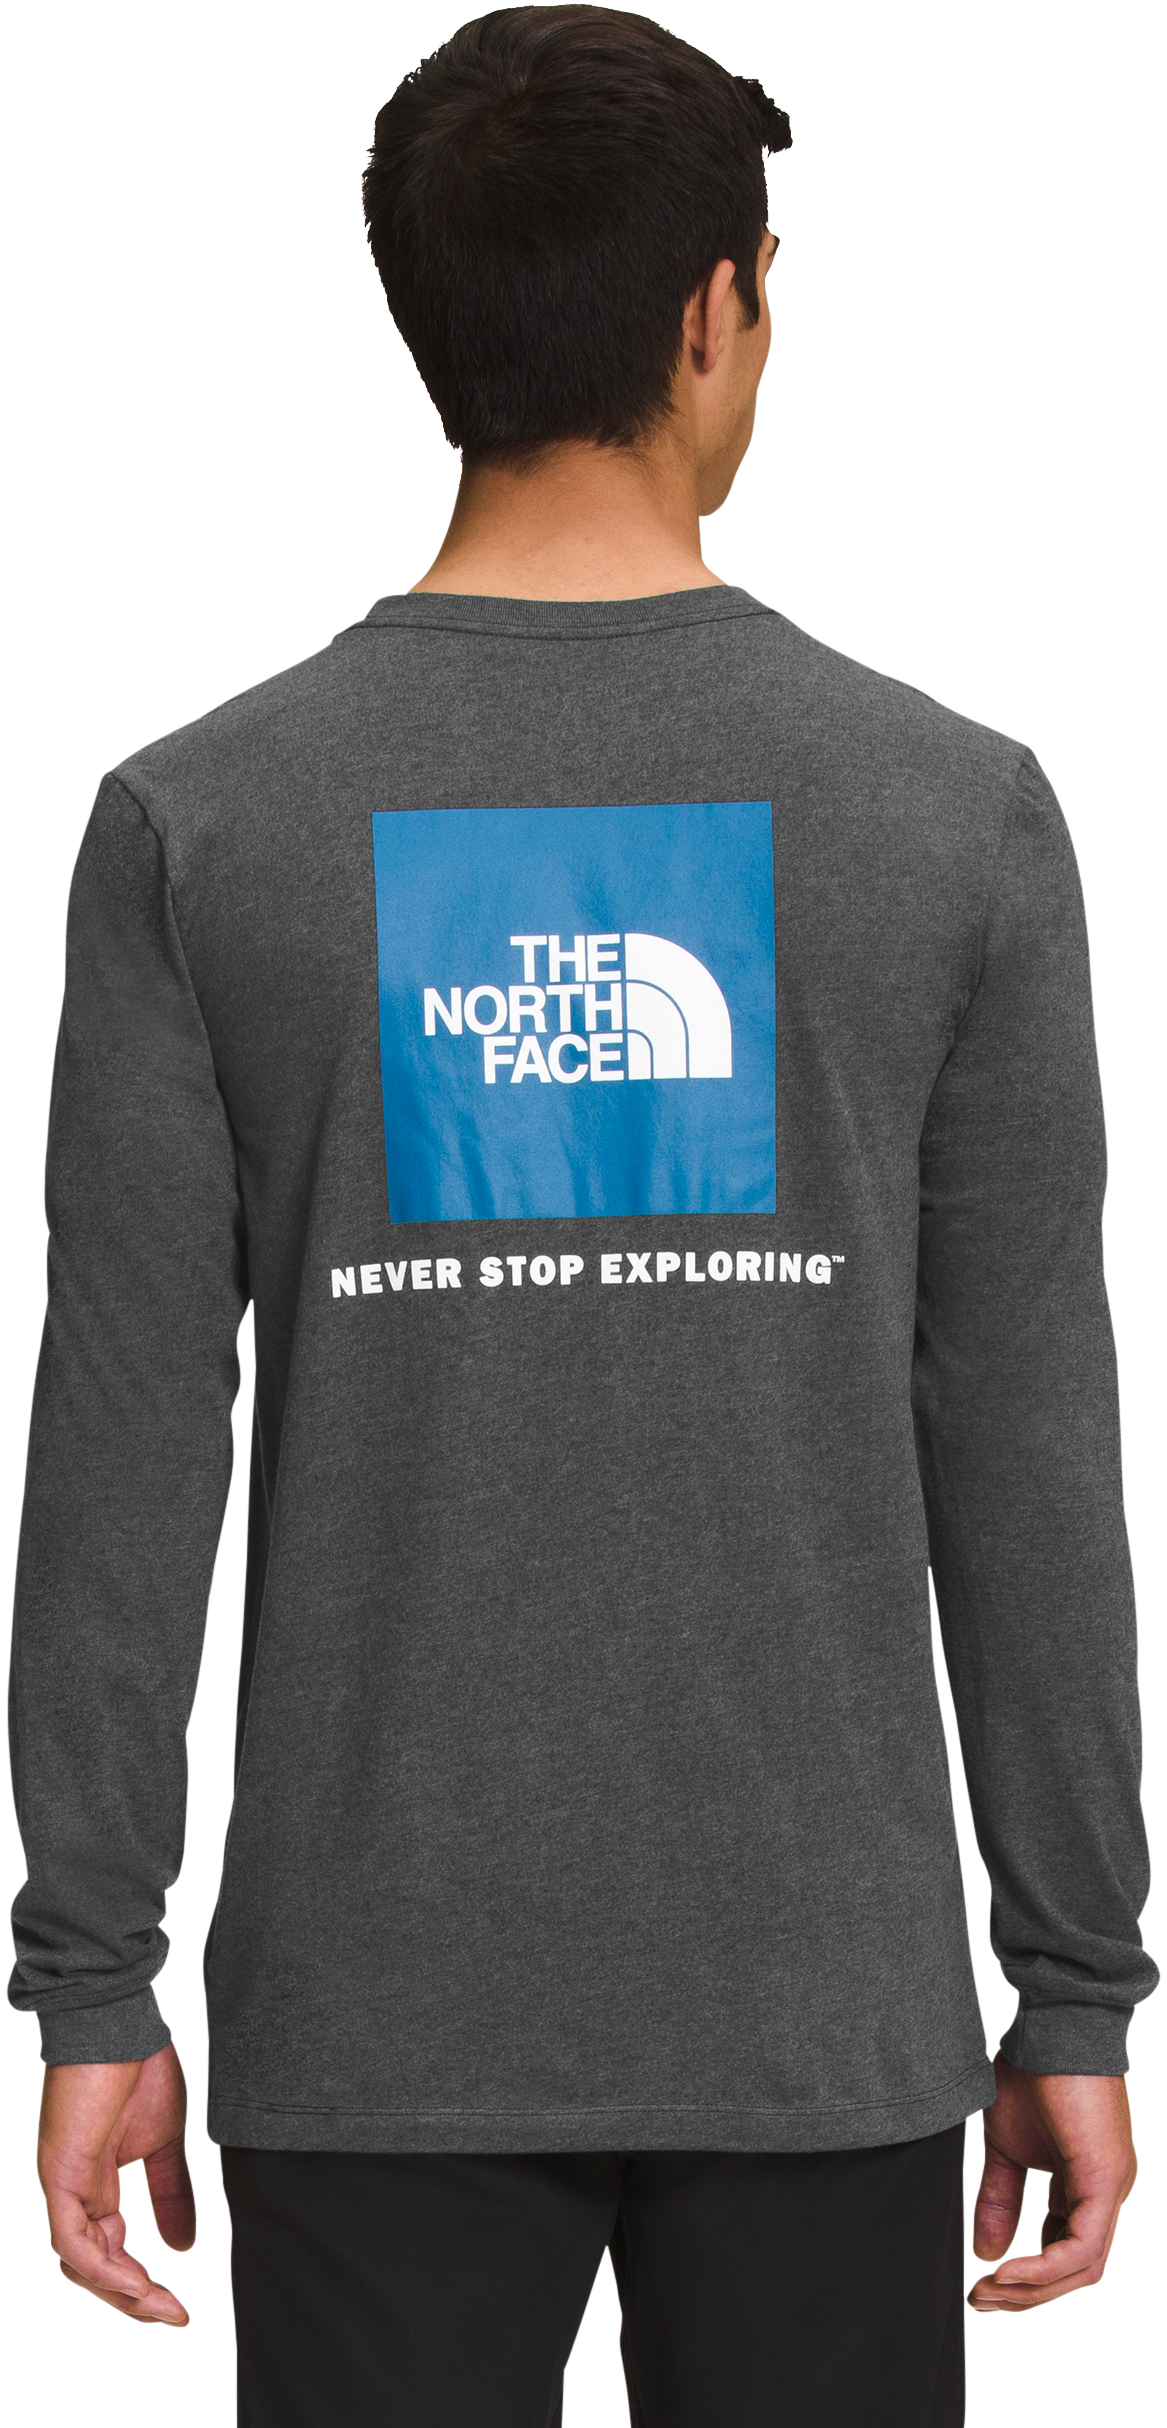 The North Face Box NSE Long-Sleeve Shirt for Men - TNF Dark Grey Heather/Banff Blue - L